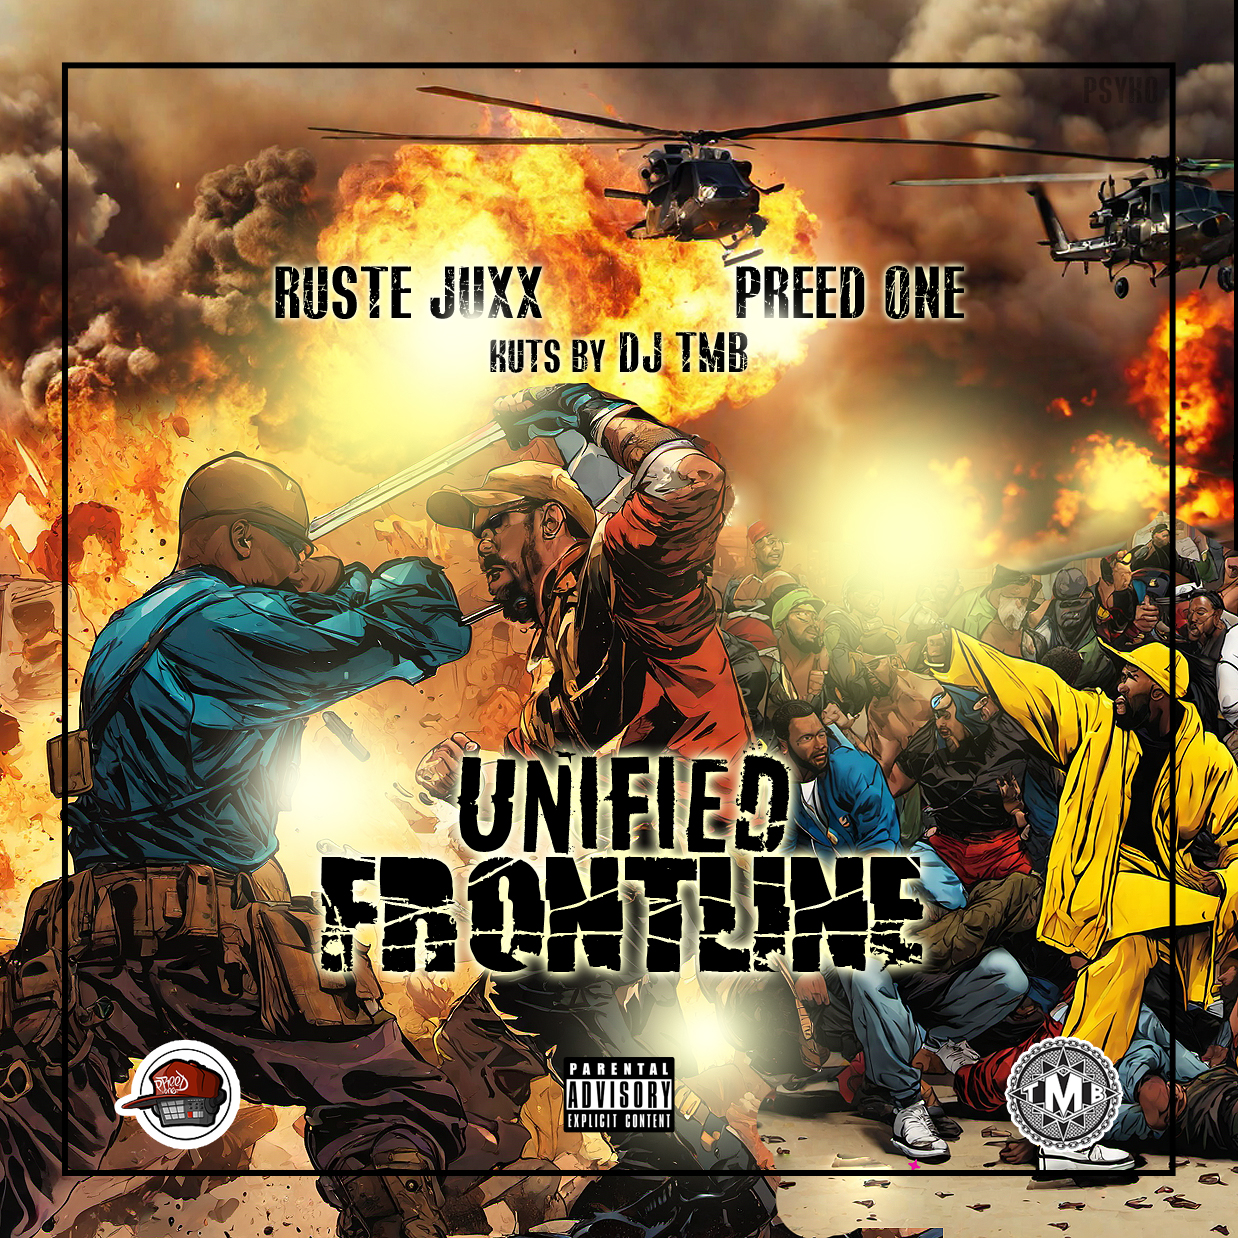 Preed One & Ruste Juxx “Unified Frontline” (Audio)